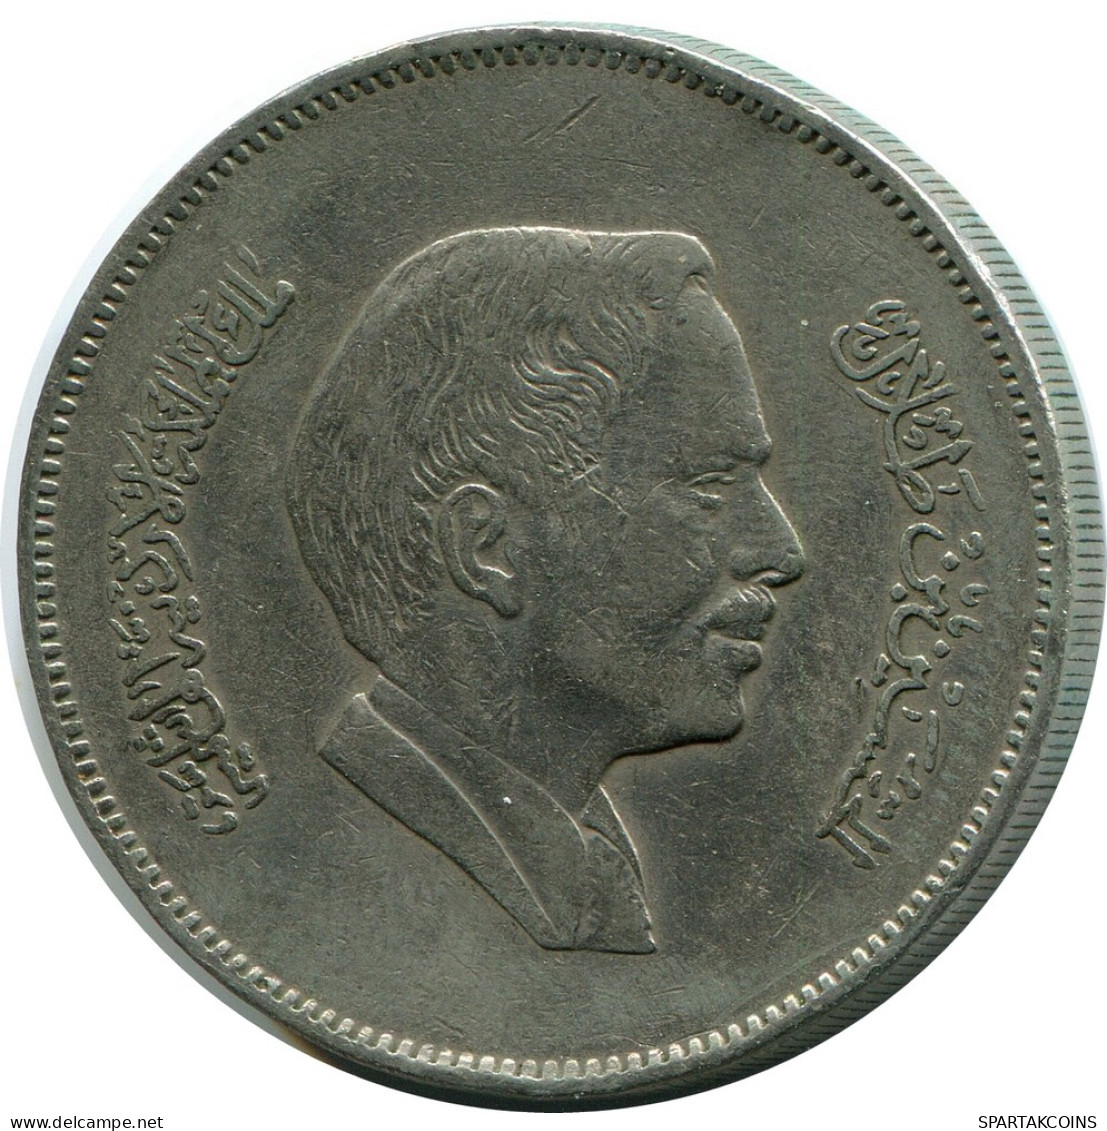 1 DIRHAM / 100 FILS 1981 JORDAN Coin #AP101.U - Jordanie